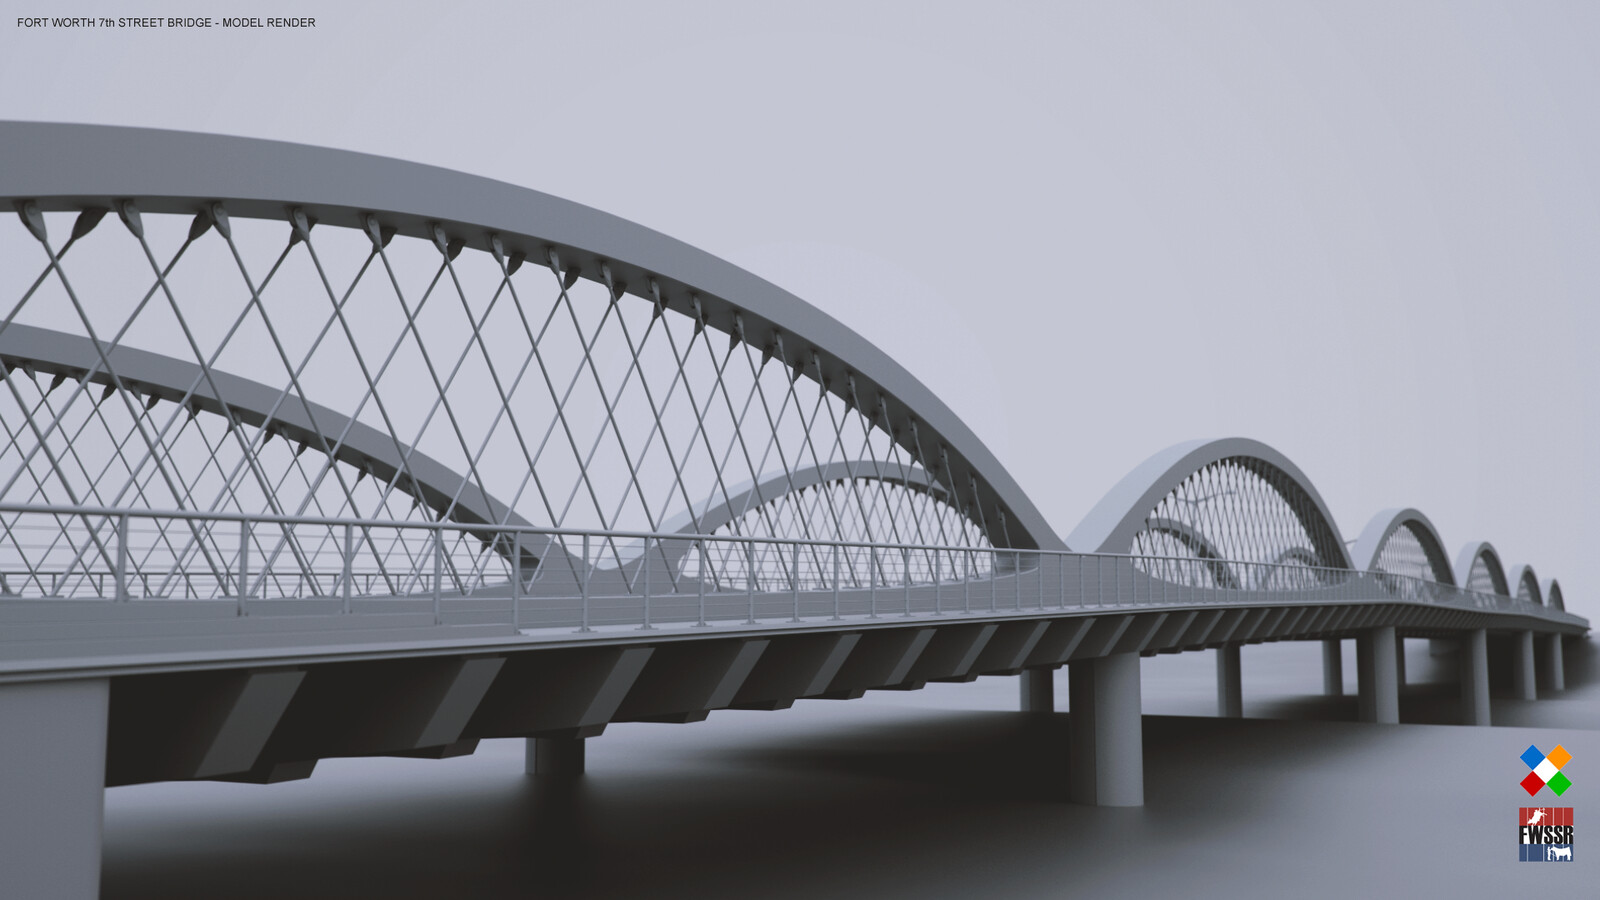 Fort Worth 7th Street Bridge Model Render